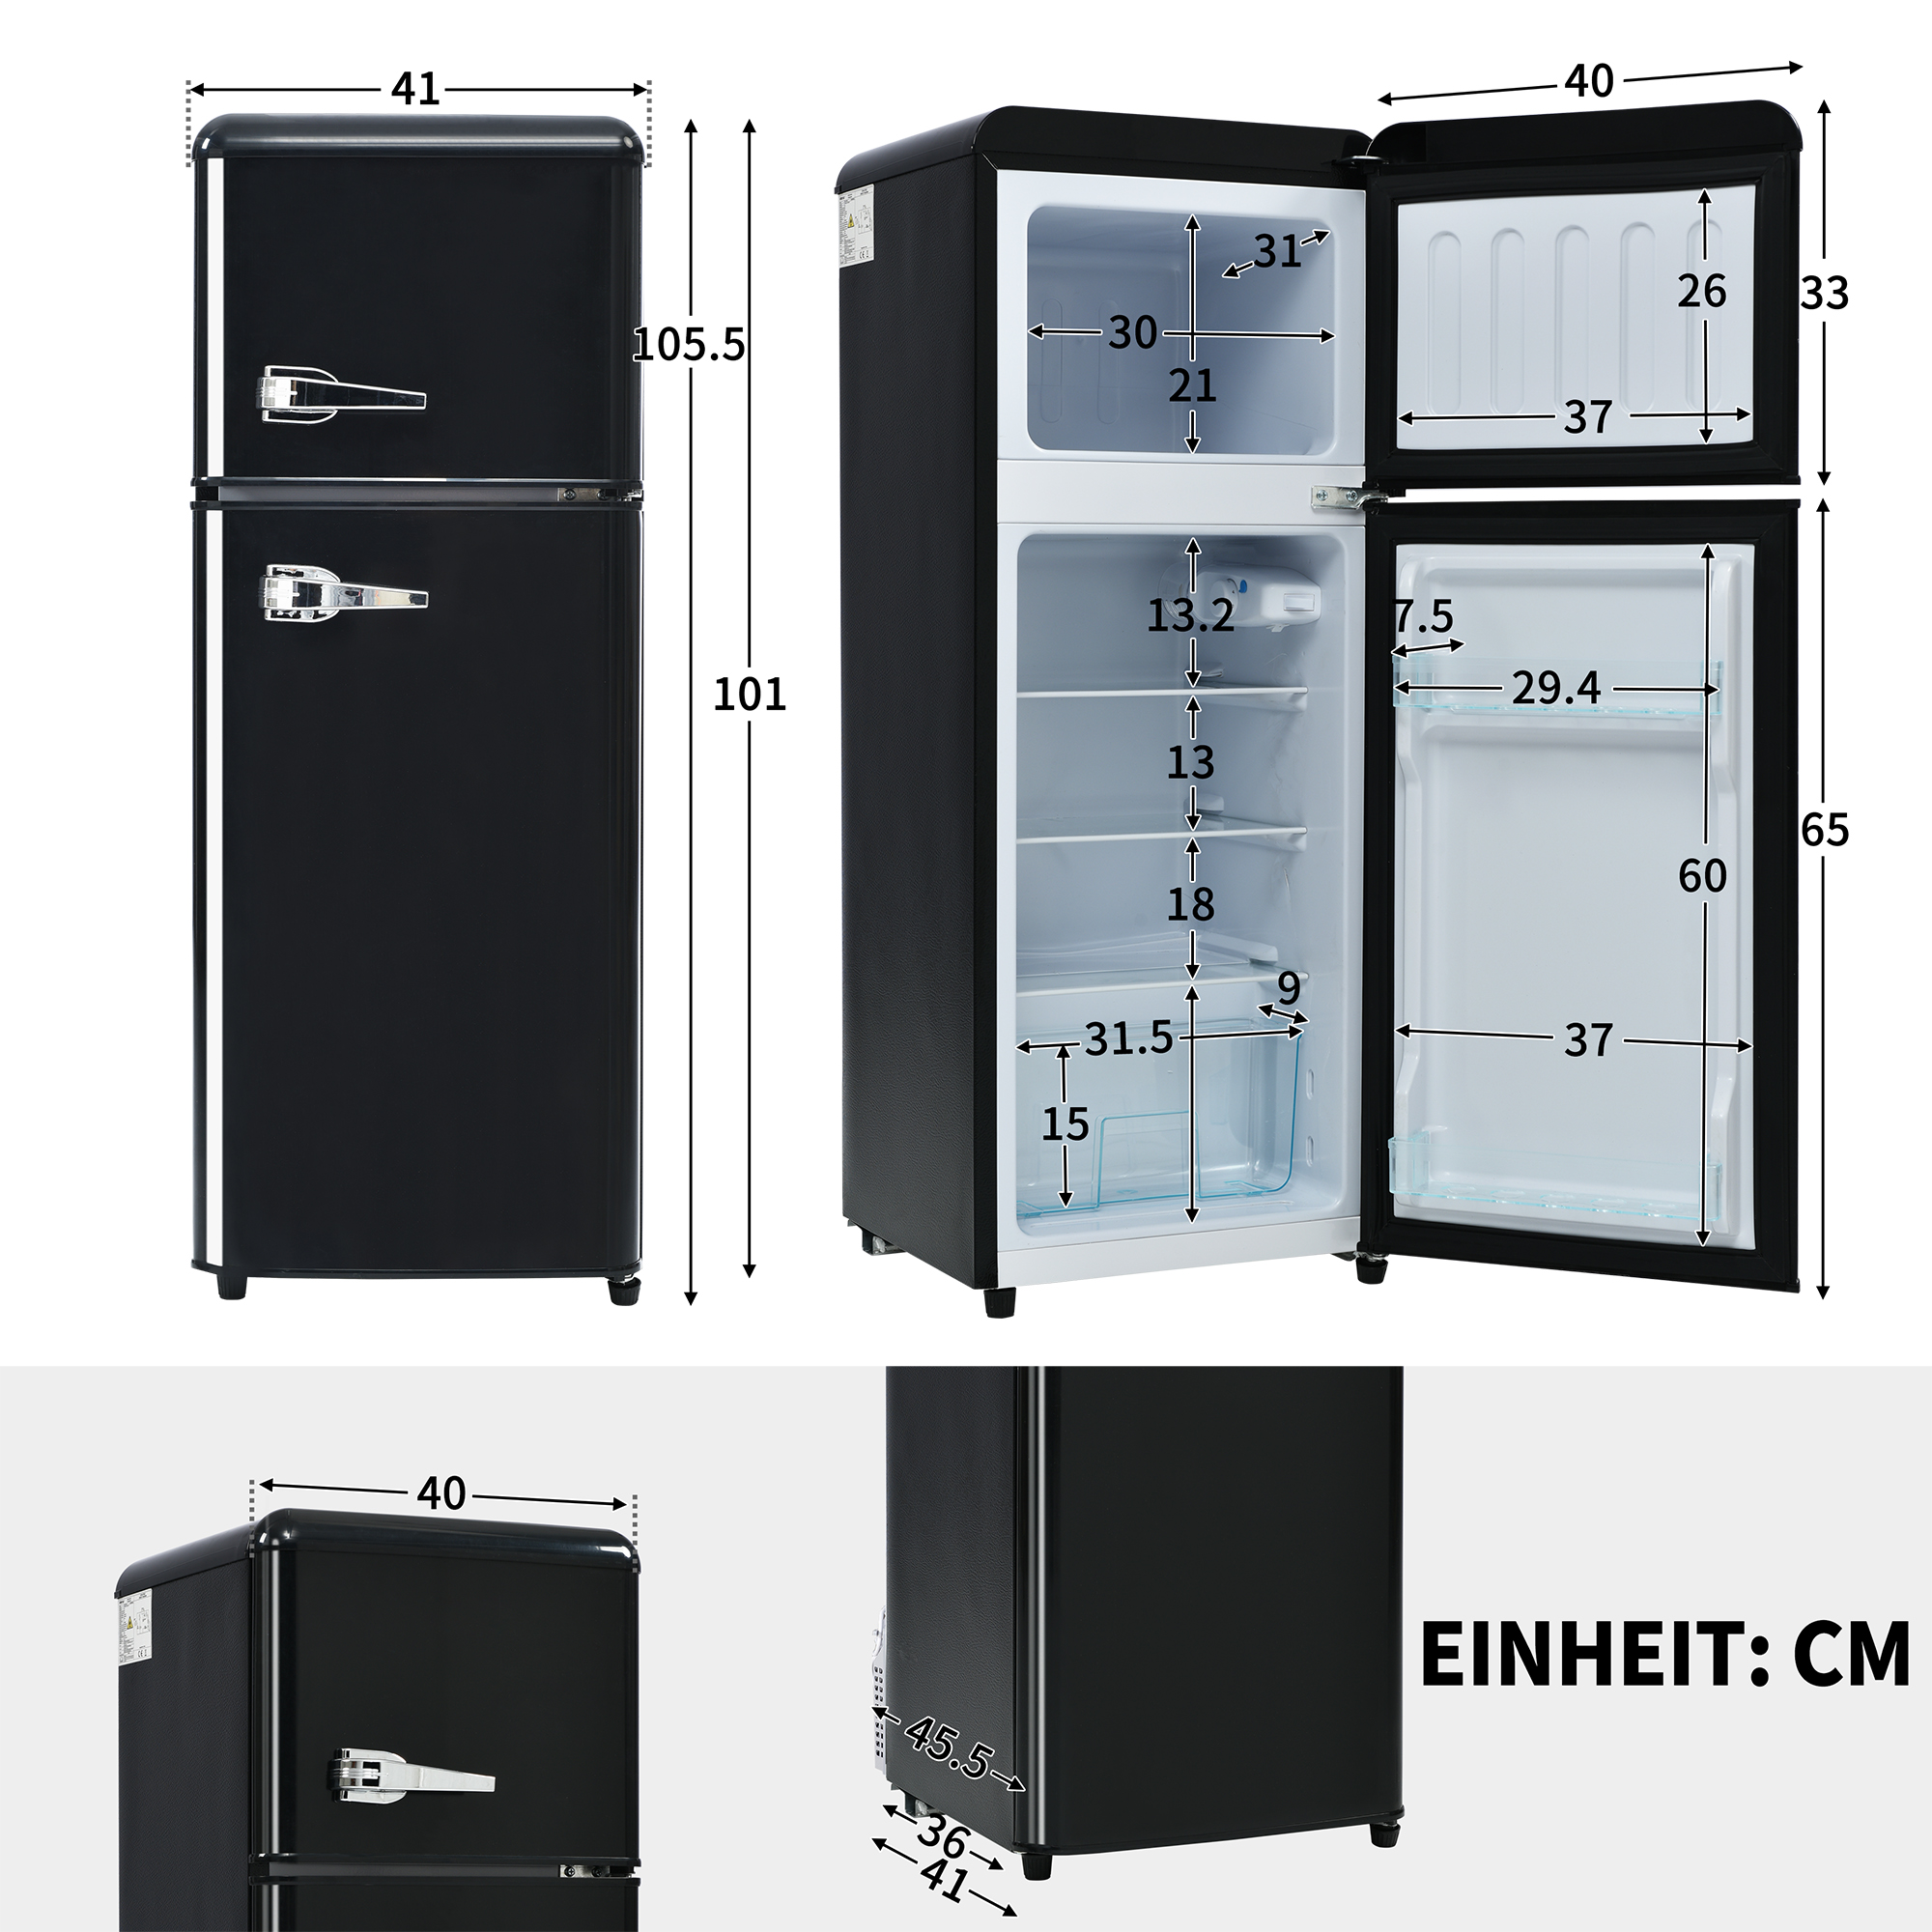 MERAX cm (F, schwarz) Kühlschrank 105,5 hoch, BCD-86S